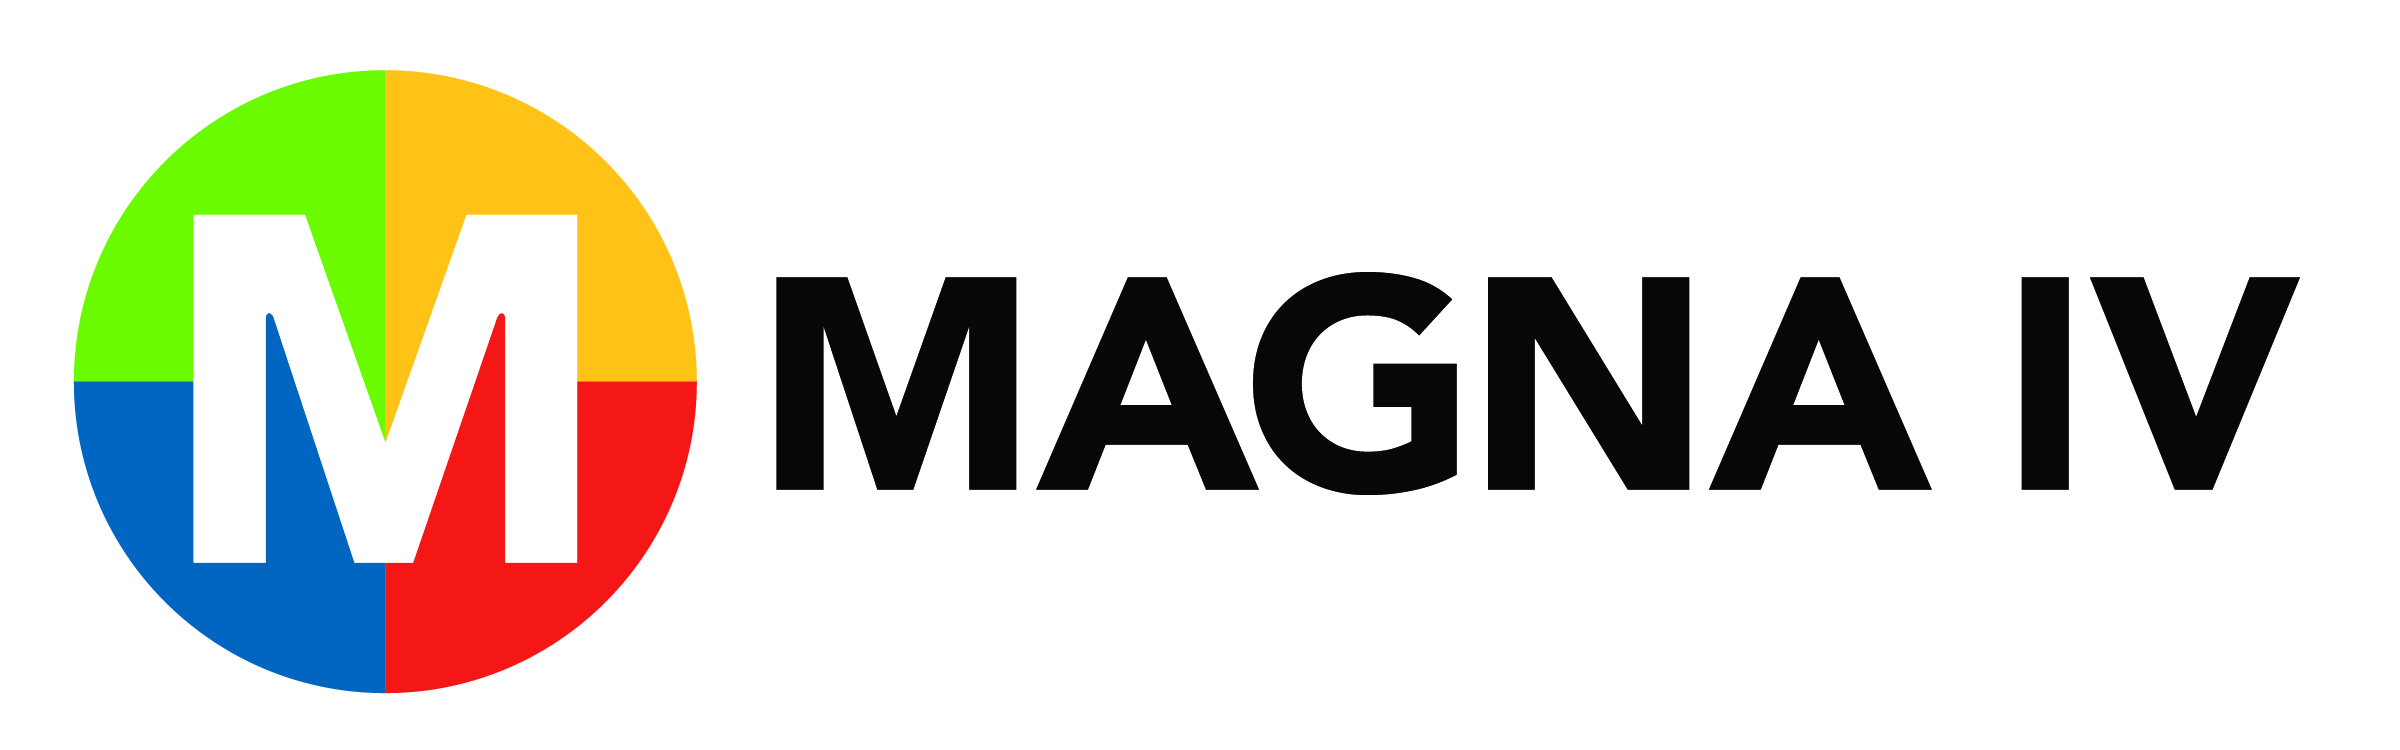 Magna IV